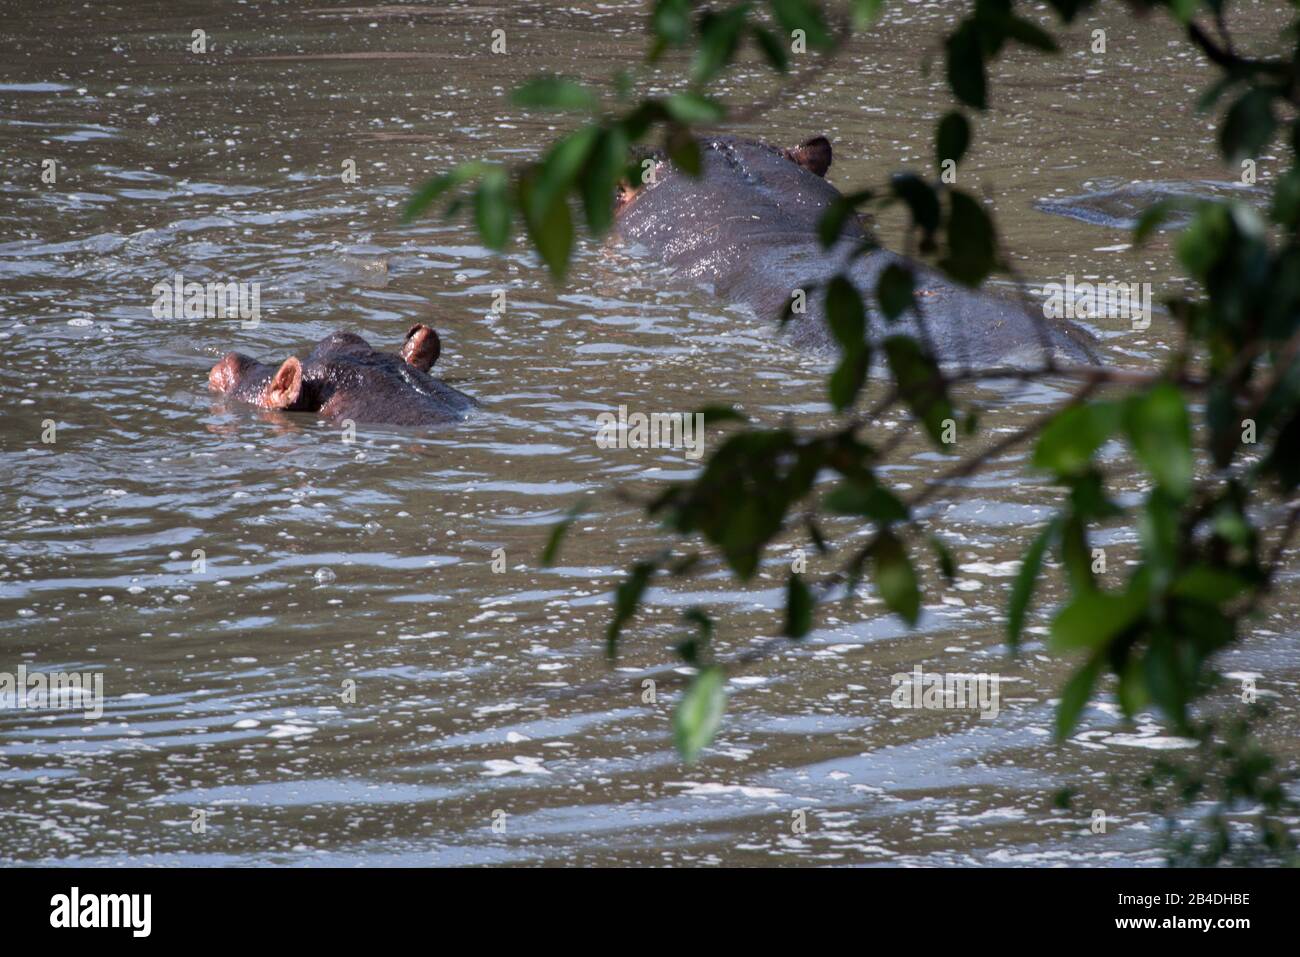 Tanzania, Northern Tanzania, Serengeti National Park, Ngorongoro Crater, Tarangire, Arusha and Lake Manyara, two hippos in the water, Hippopotamus amphibius Stock Photo